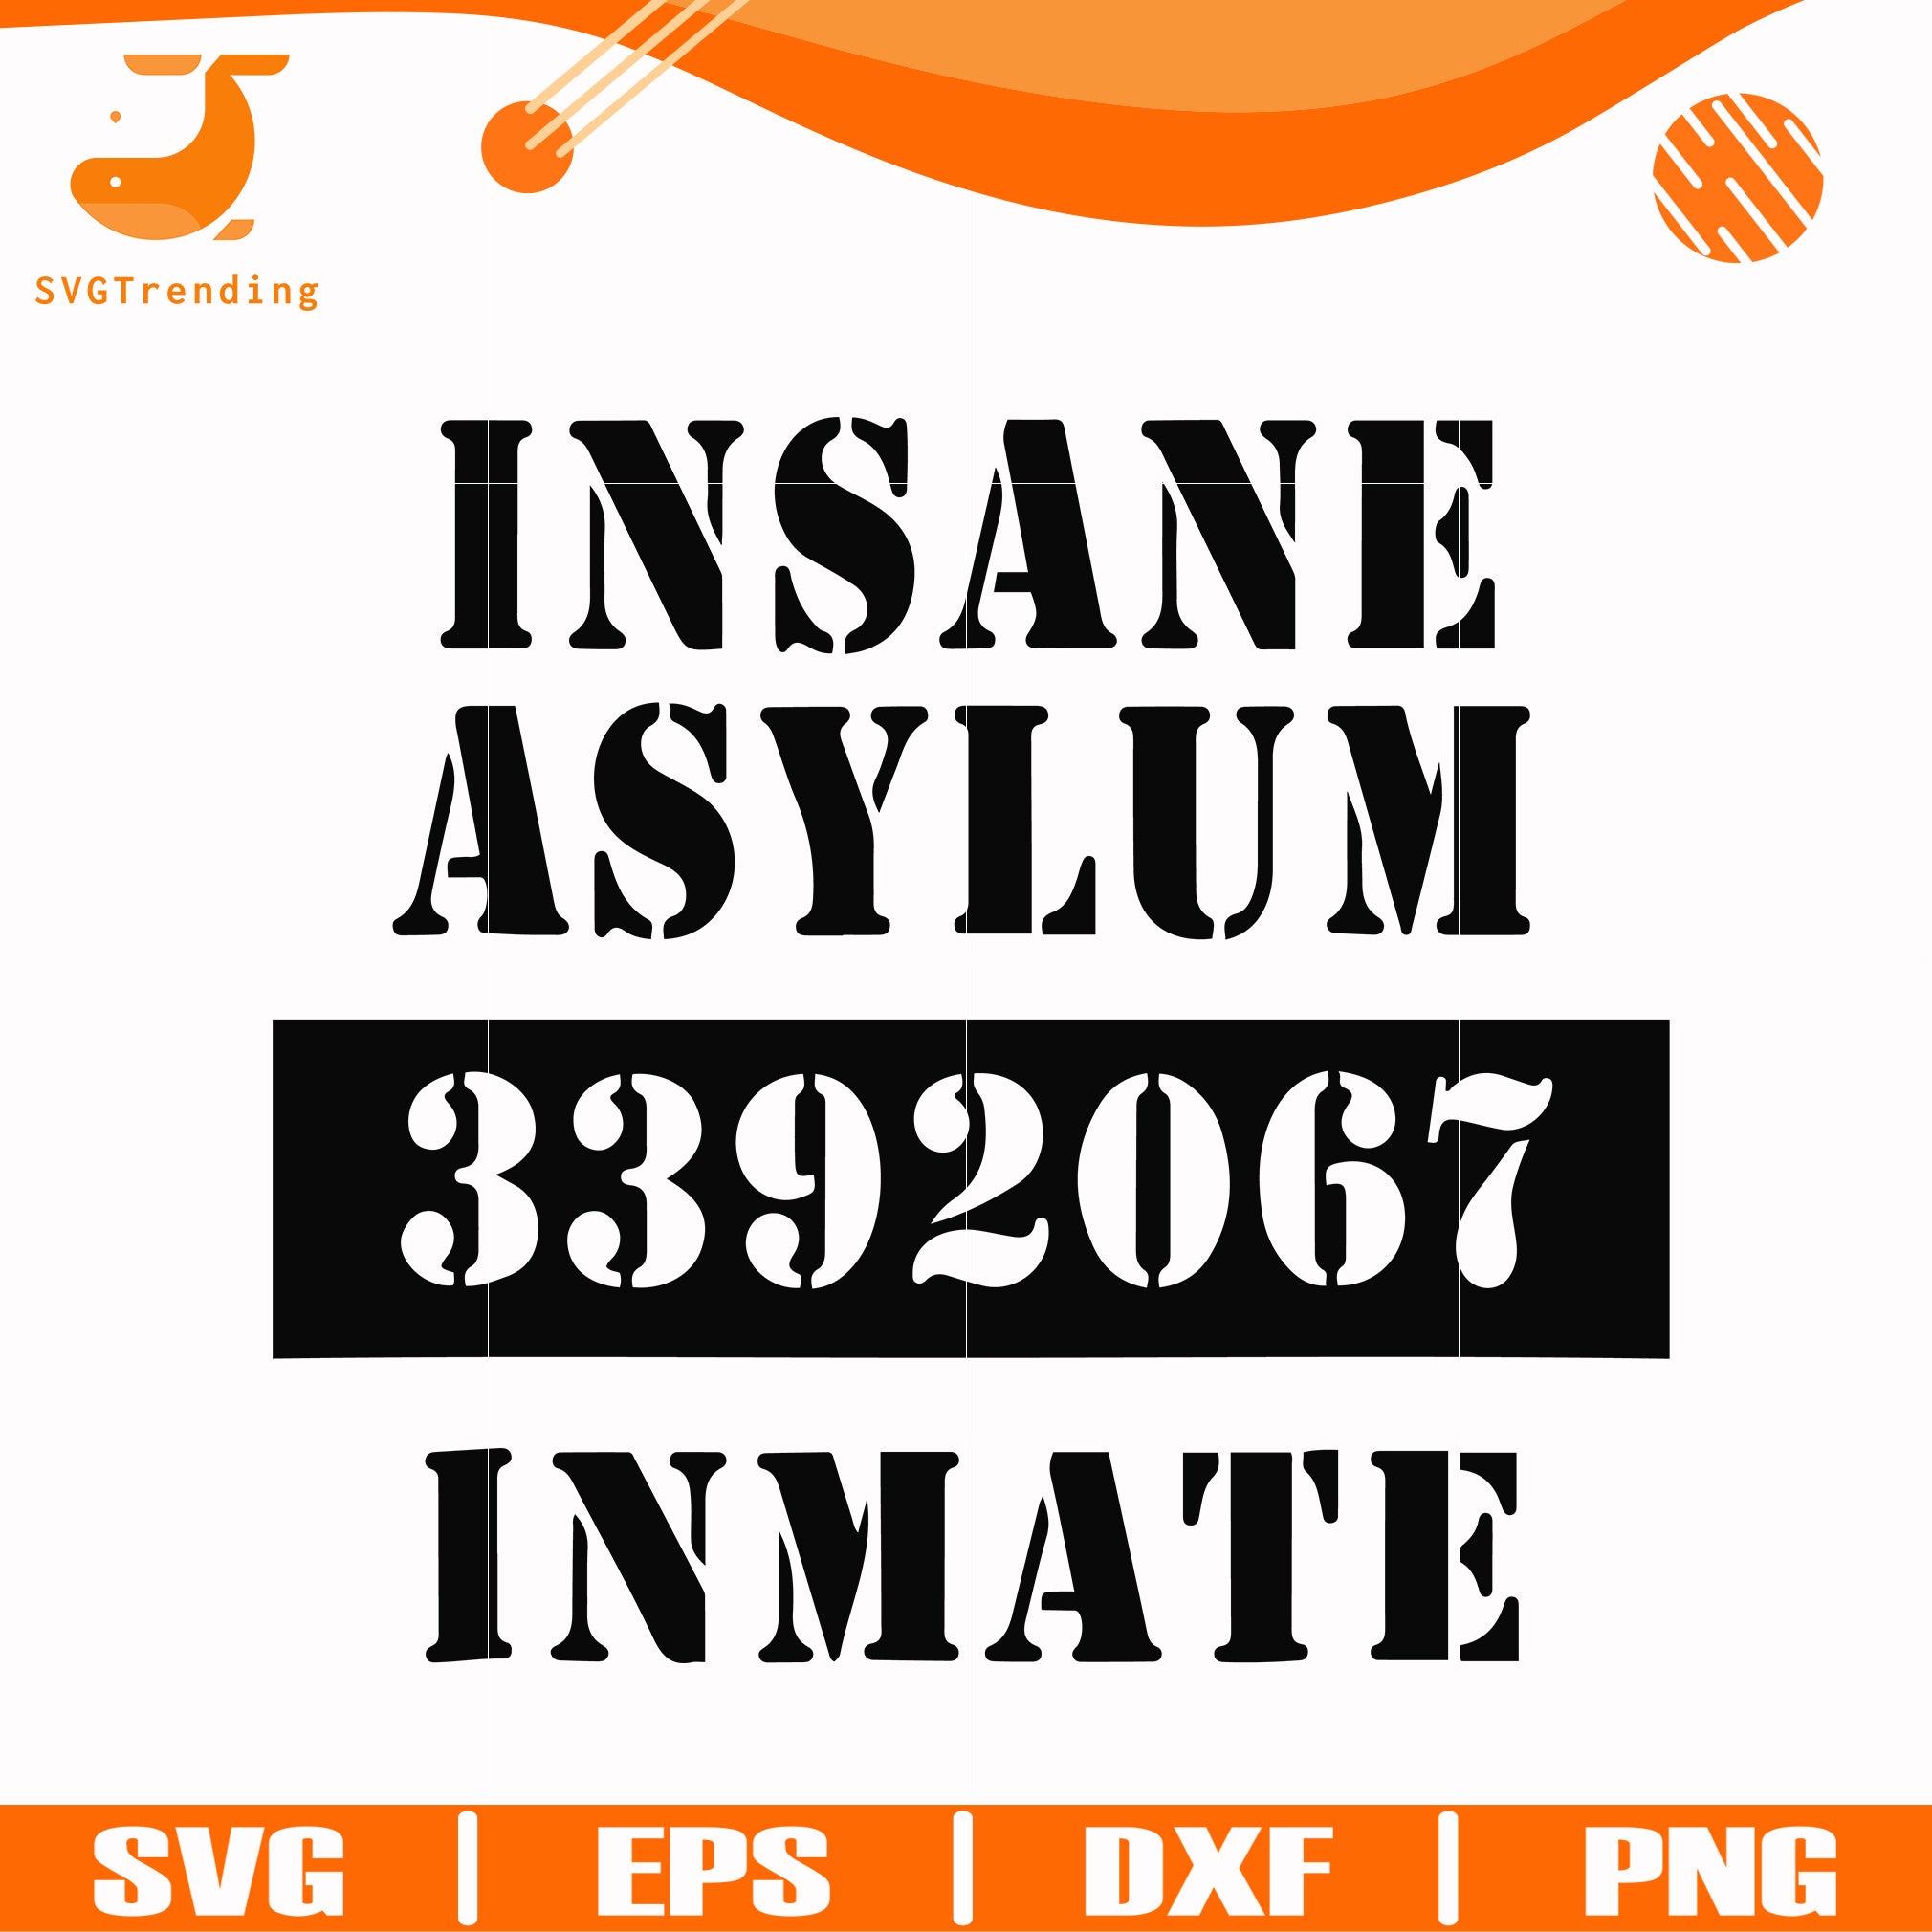 Download Insane Asylum 3392067 Inmate Svg Halloween Svg Png Dxf Eps Digital Svgtrending